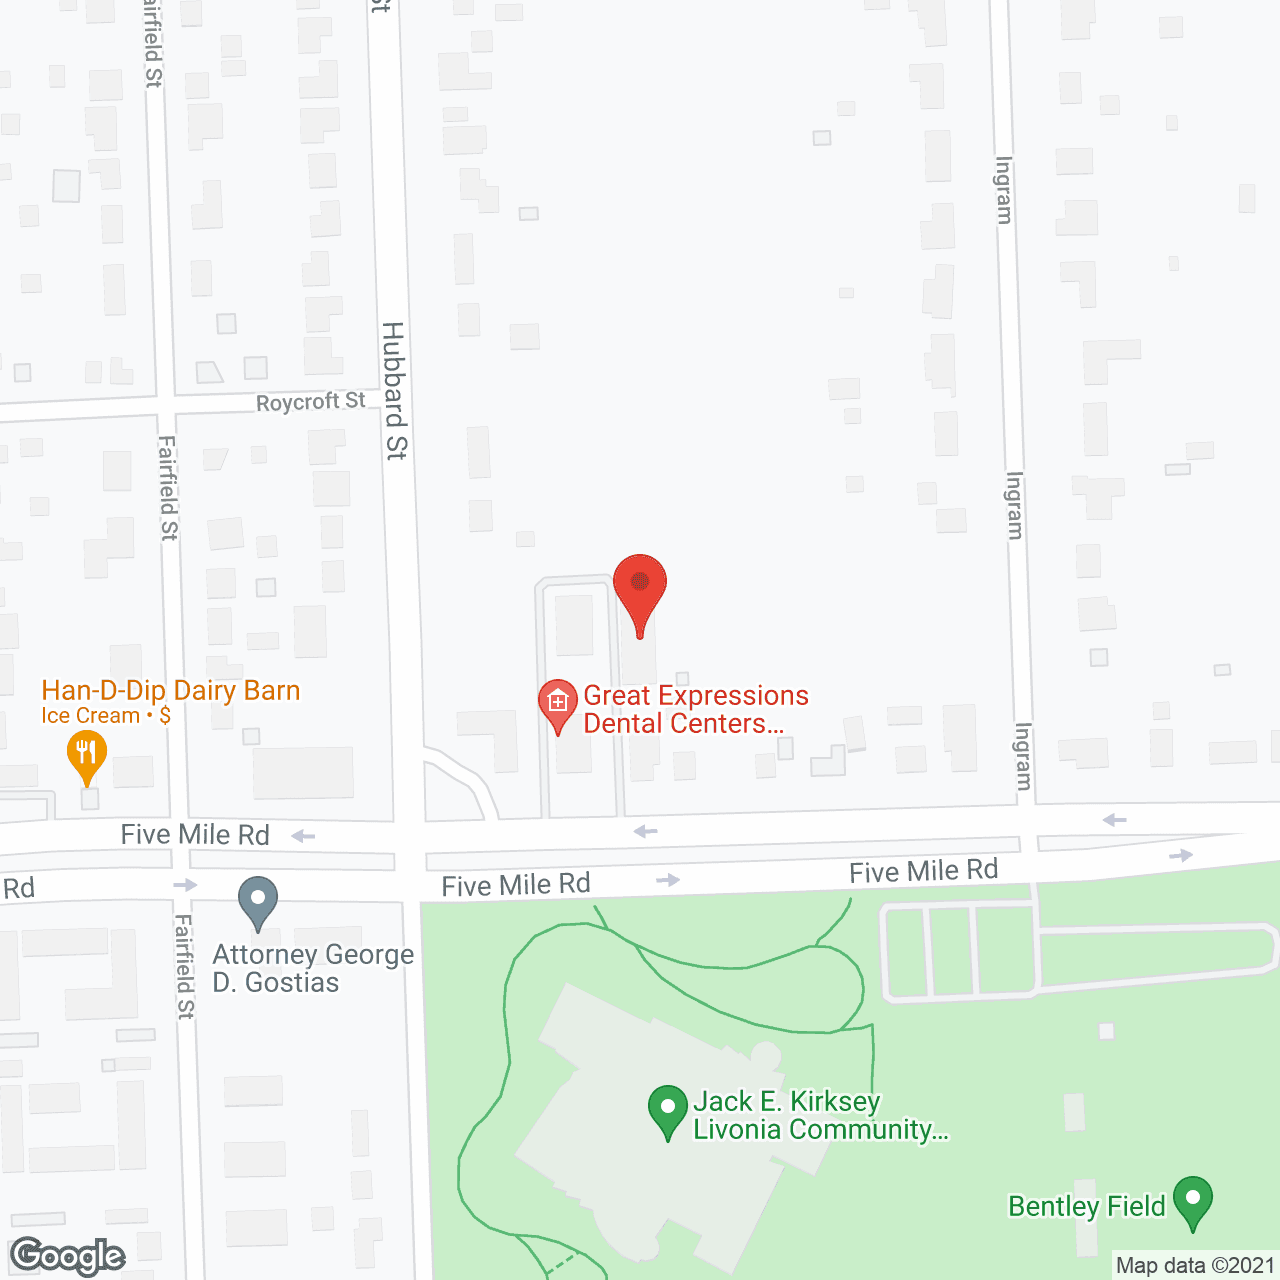 Home Instead - Livonia, MI in google map